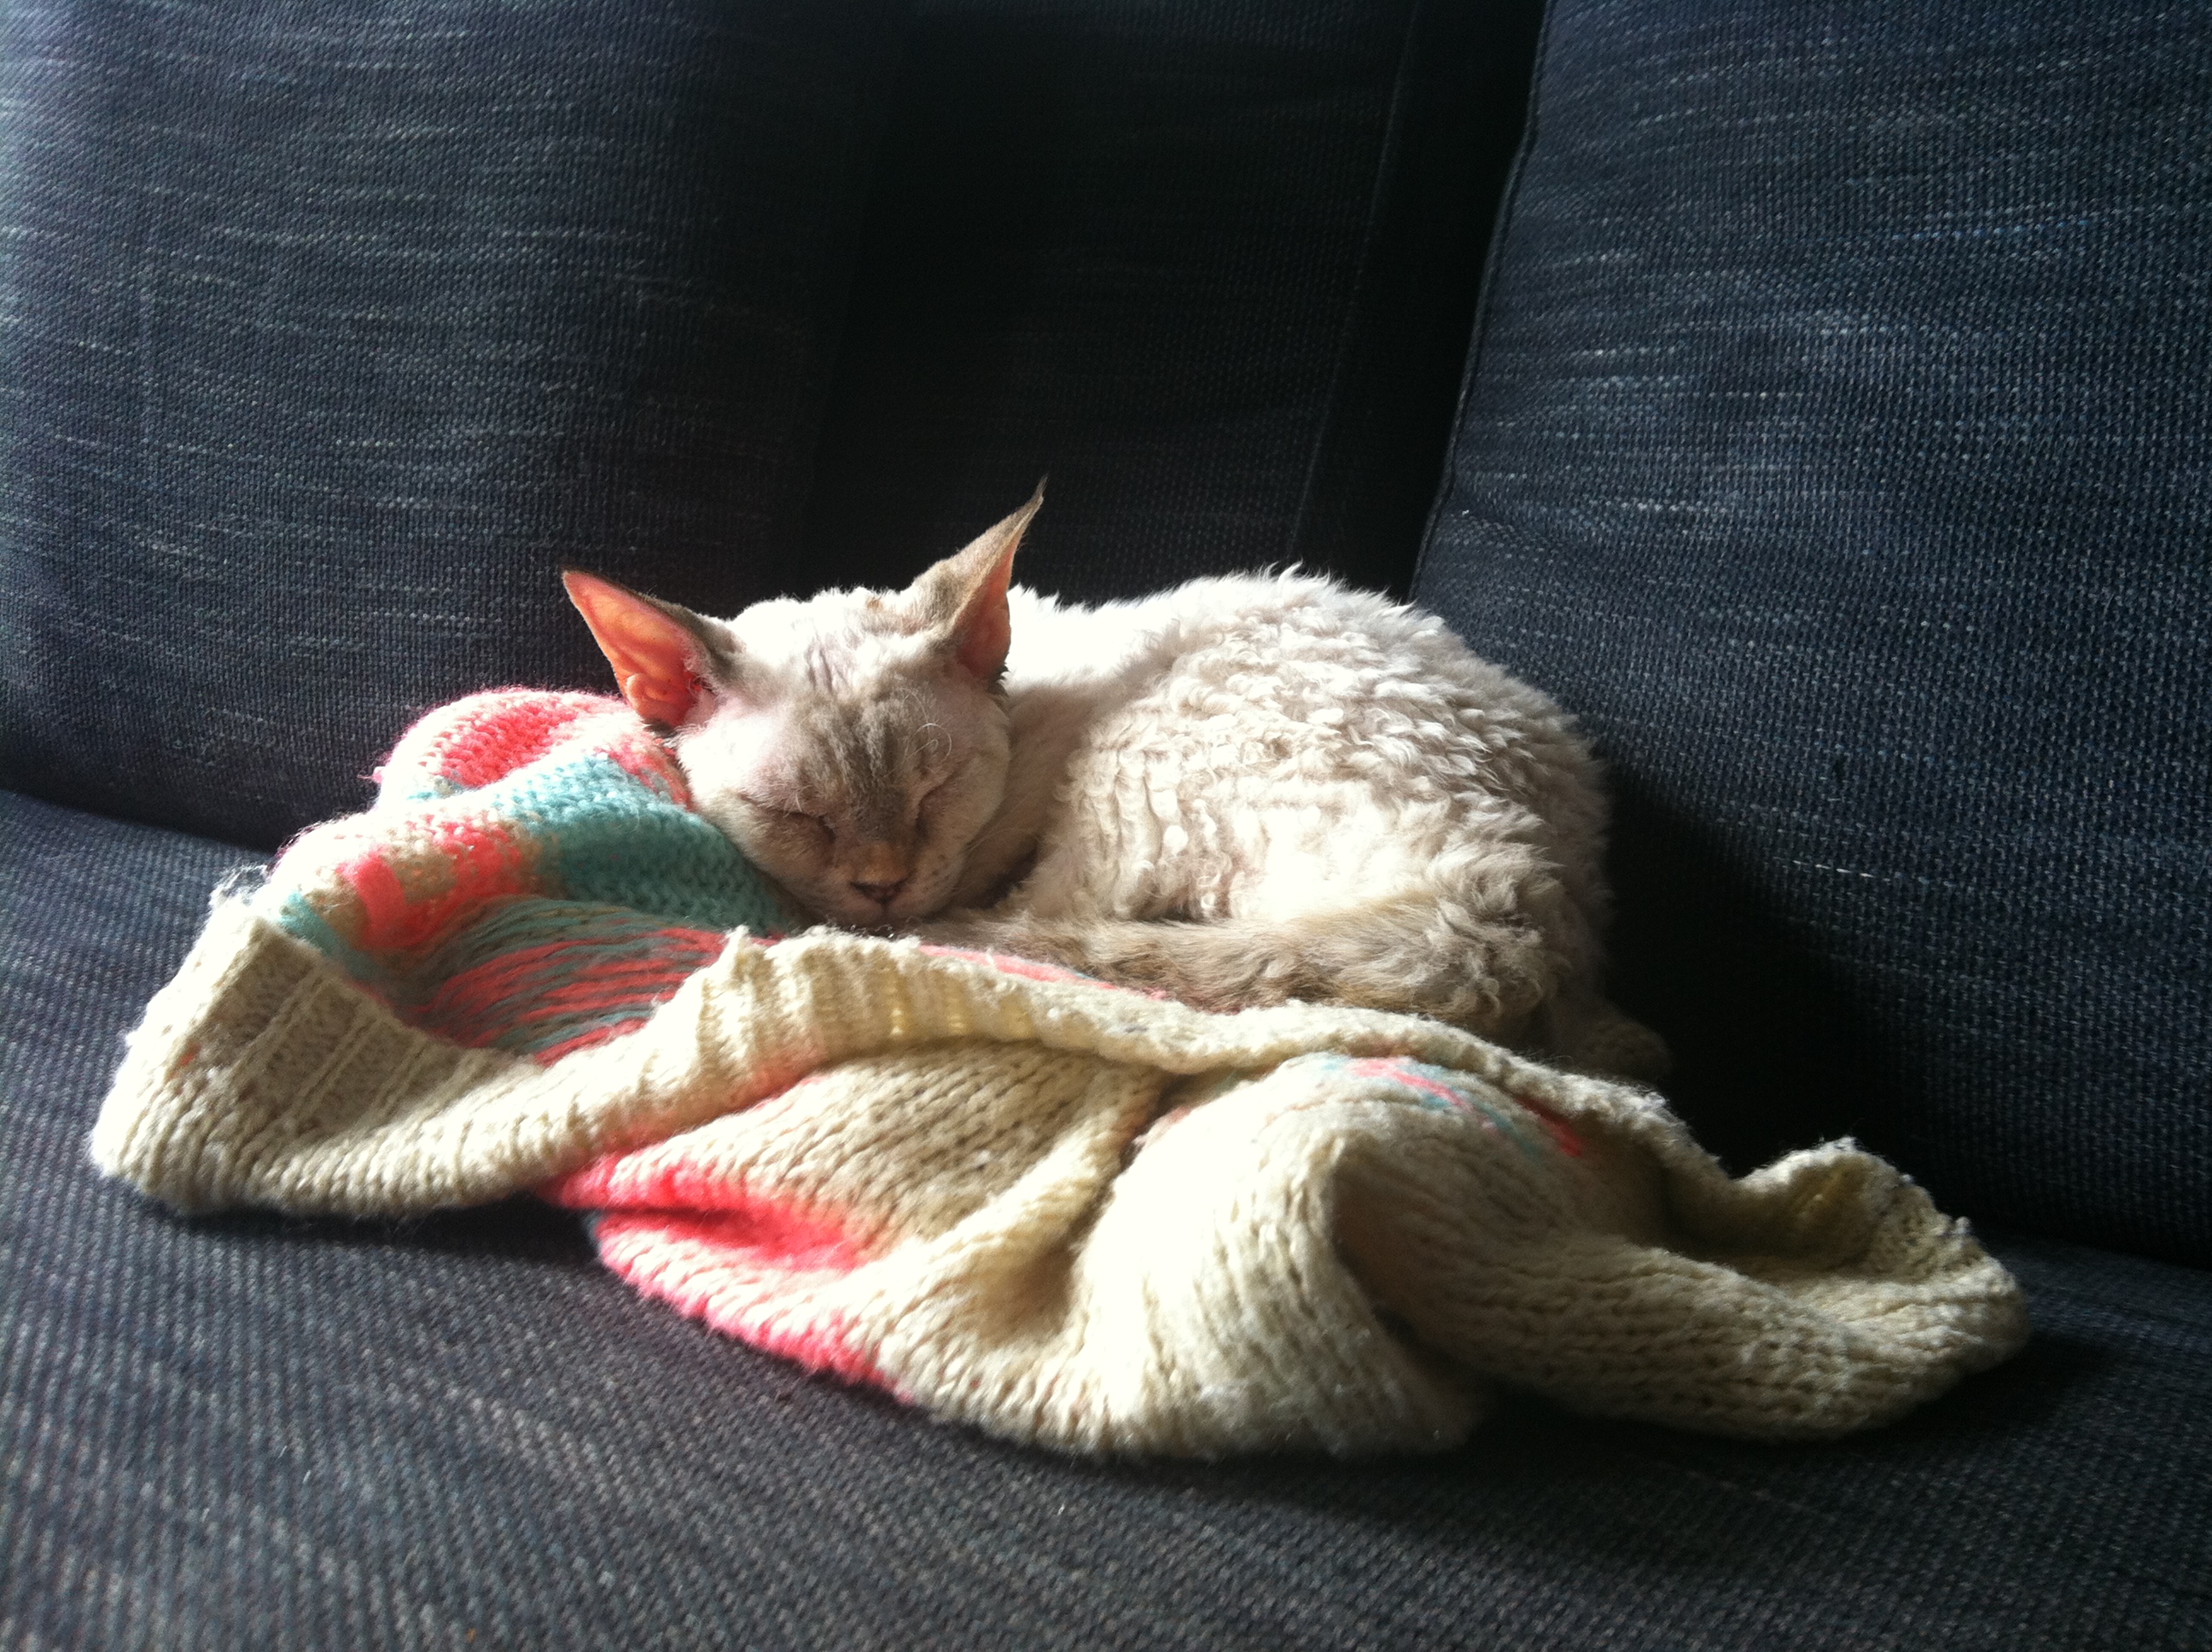 Doris the cat sleeping on her jumper